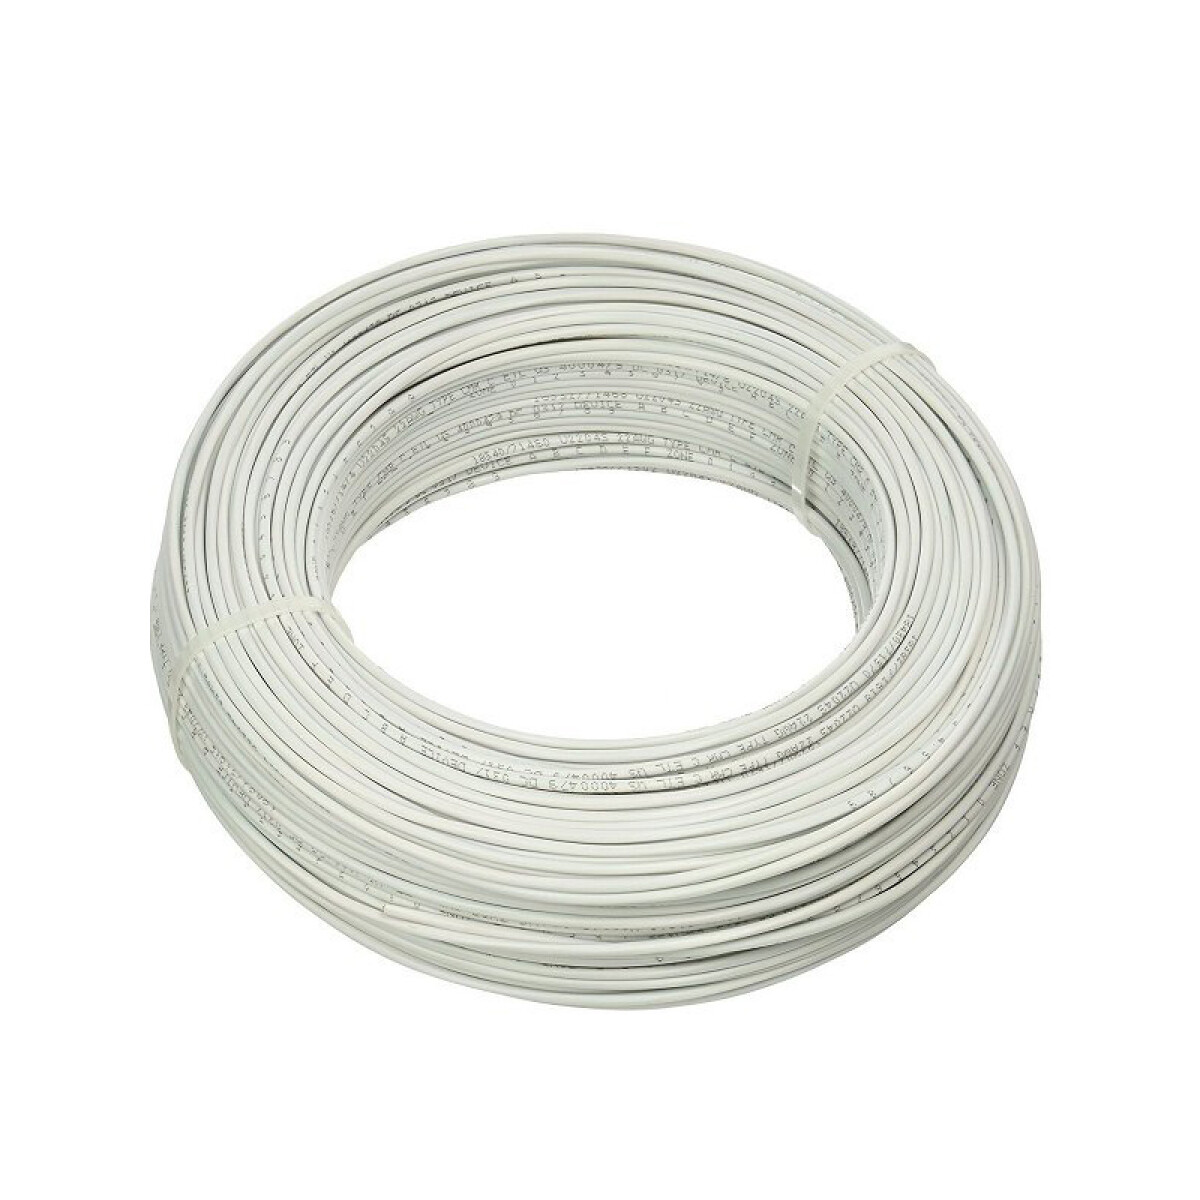 Cable de cobre flexible 10mm² blanco - Rollo 100mt - C94368 